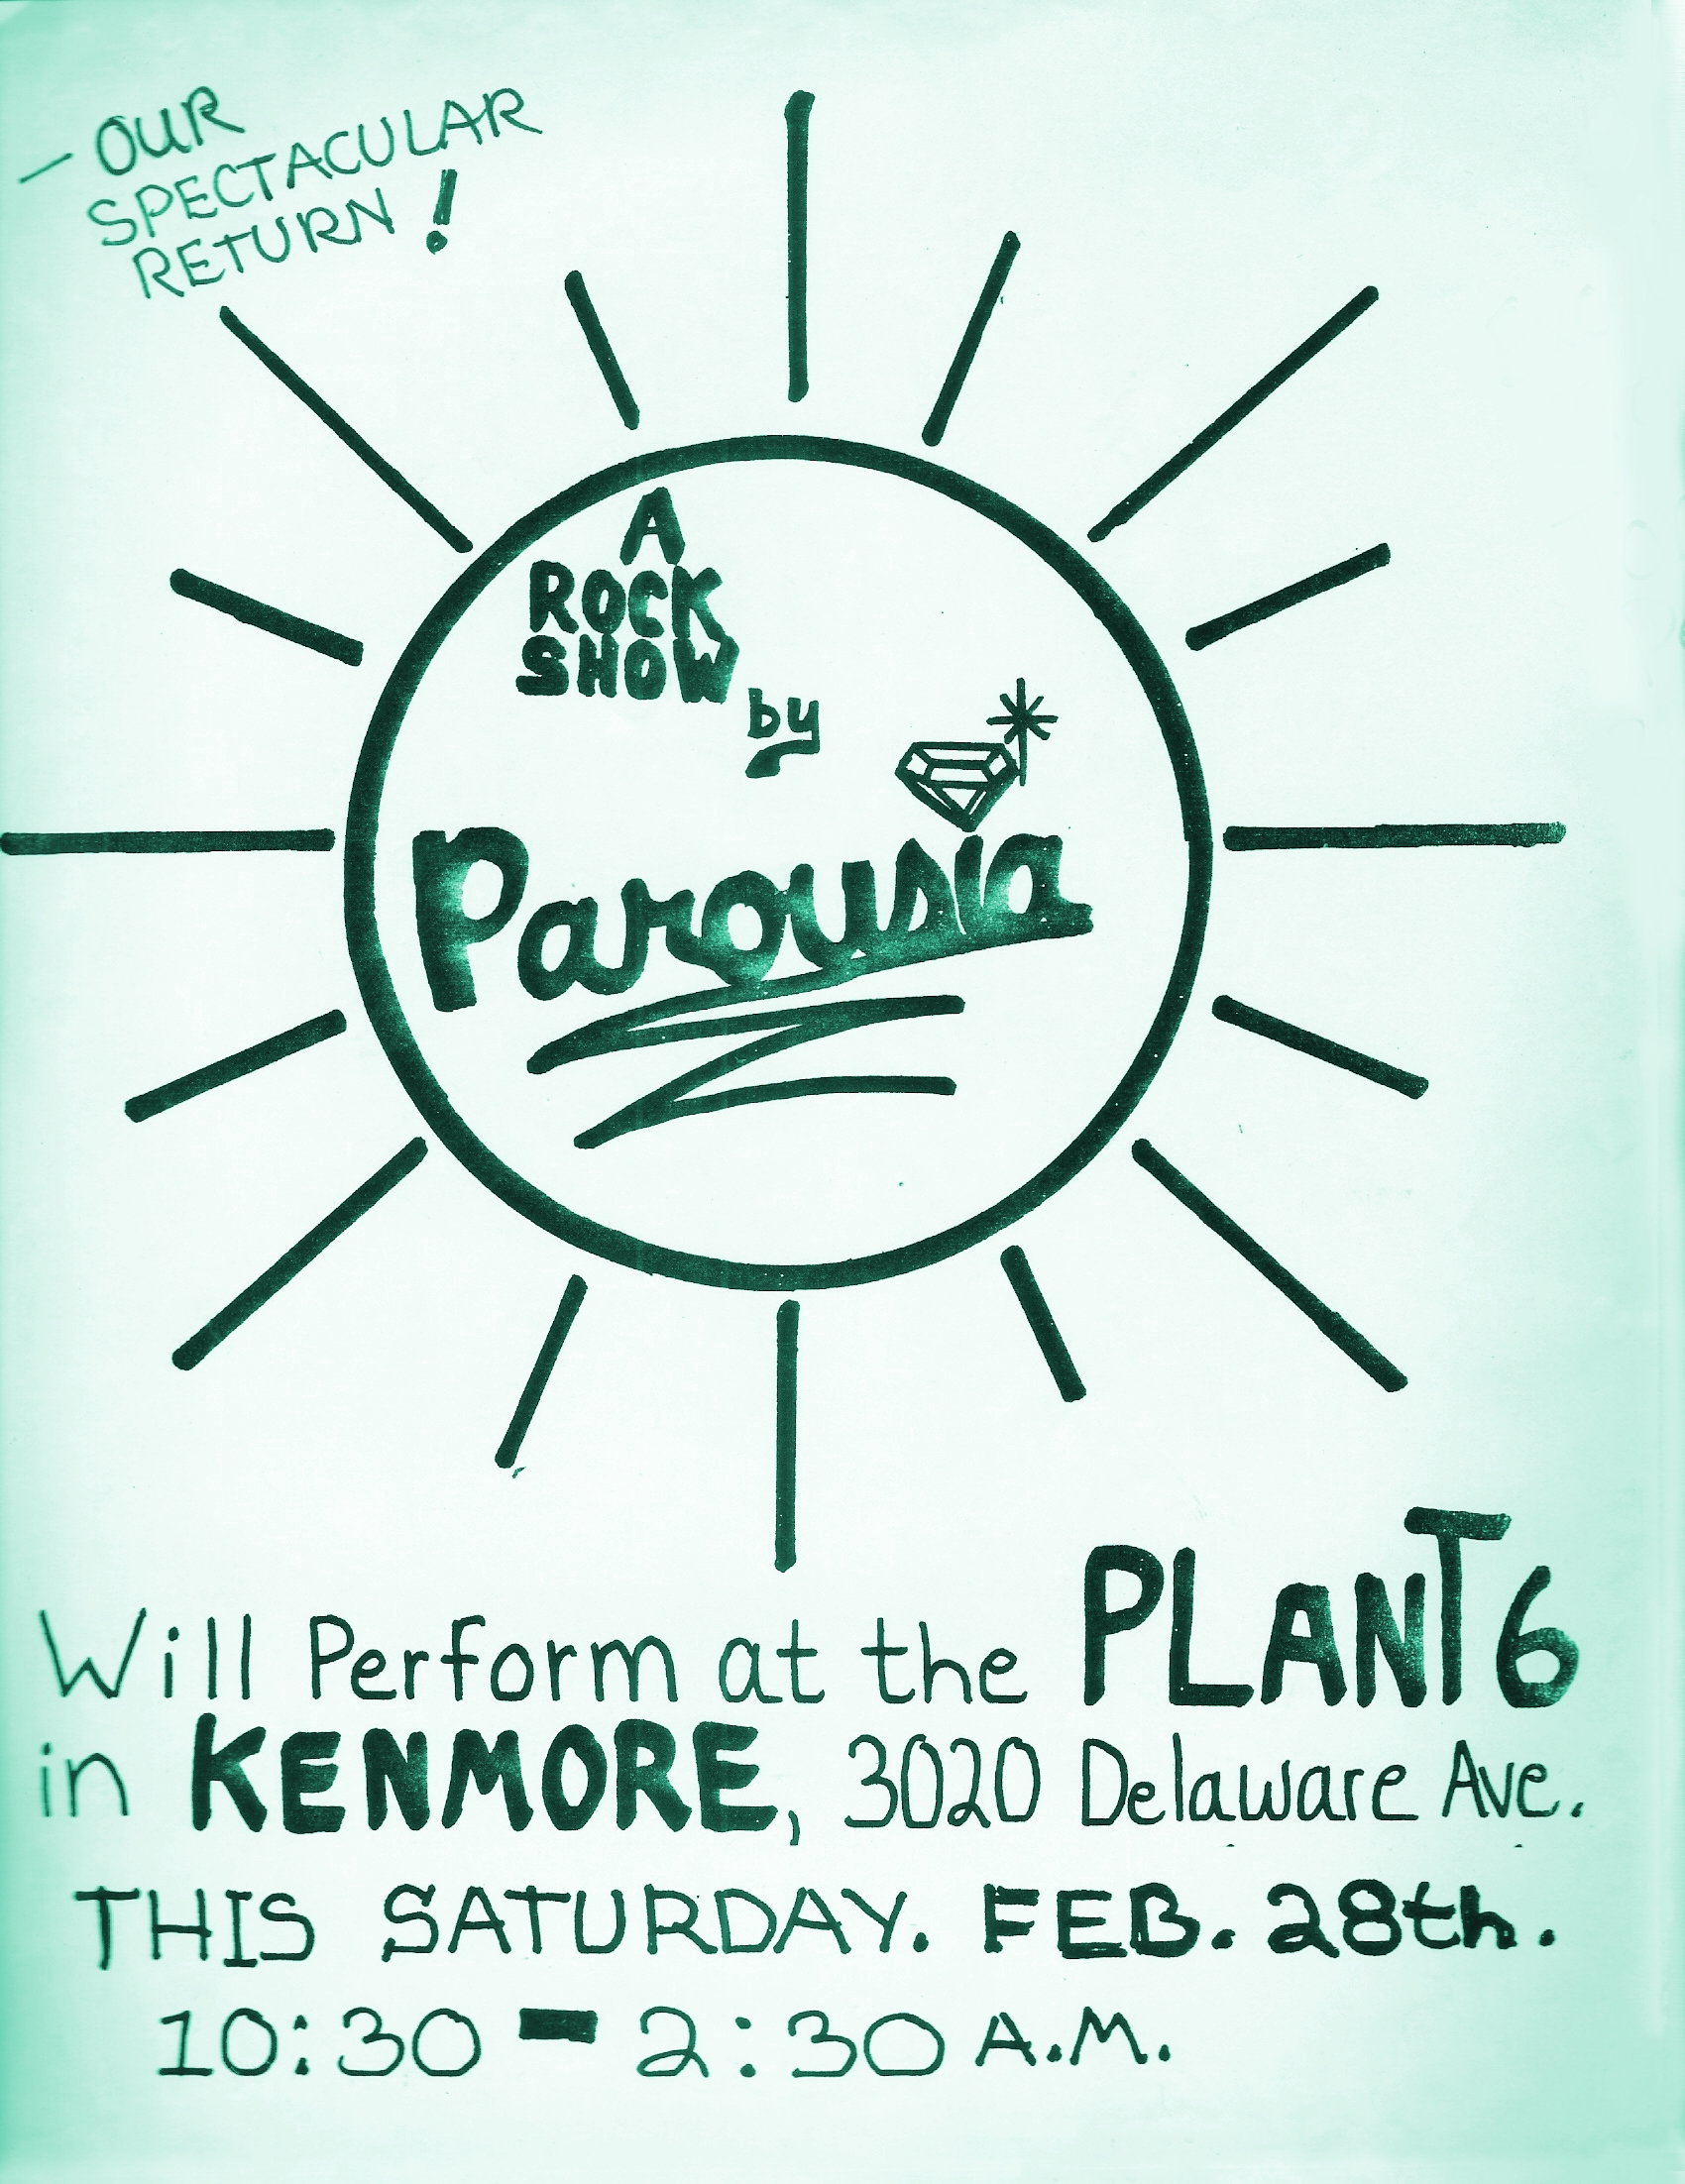 Parousia at the Plant 6 - Saturday February 28th, 1981